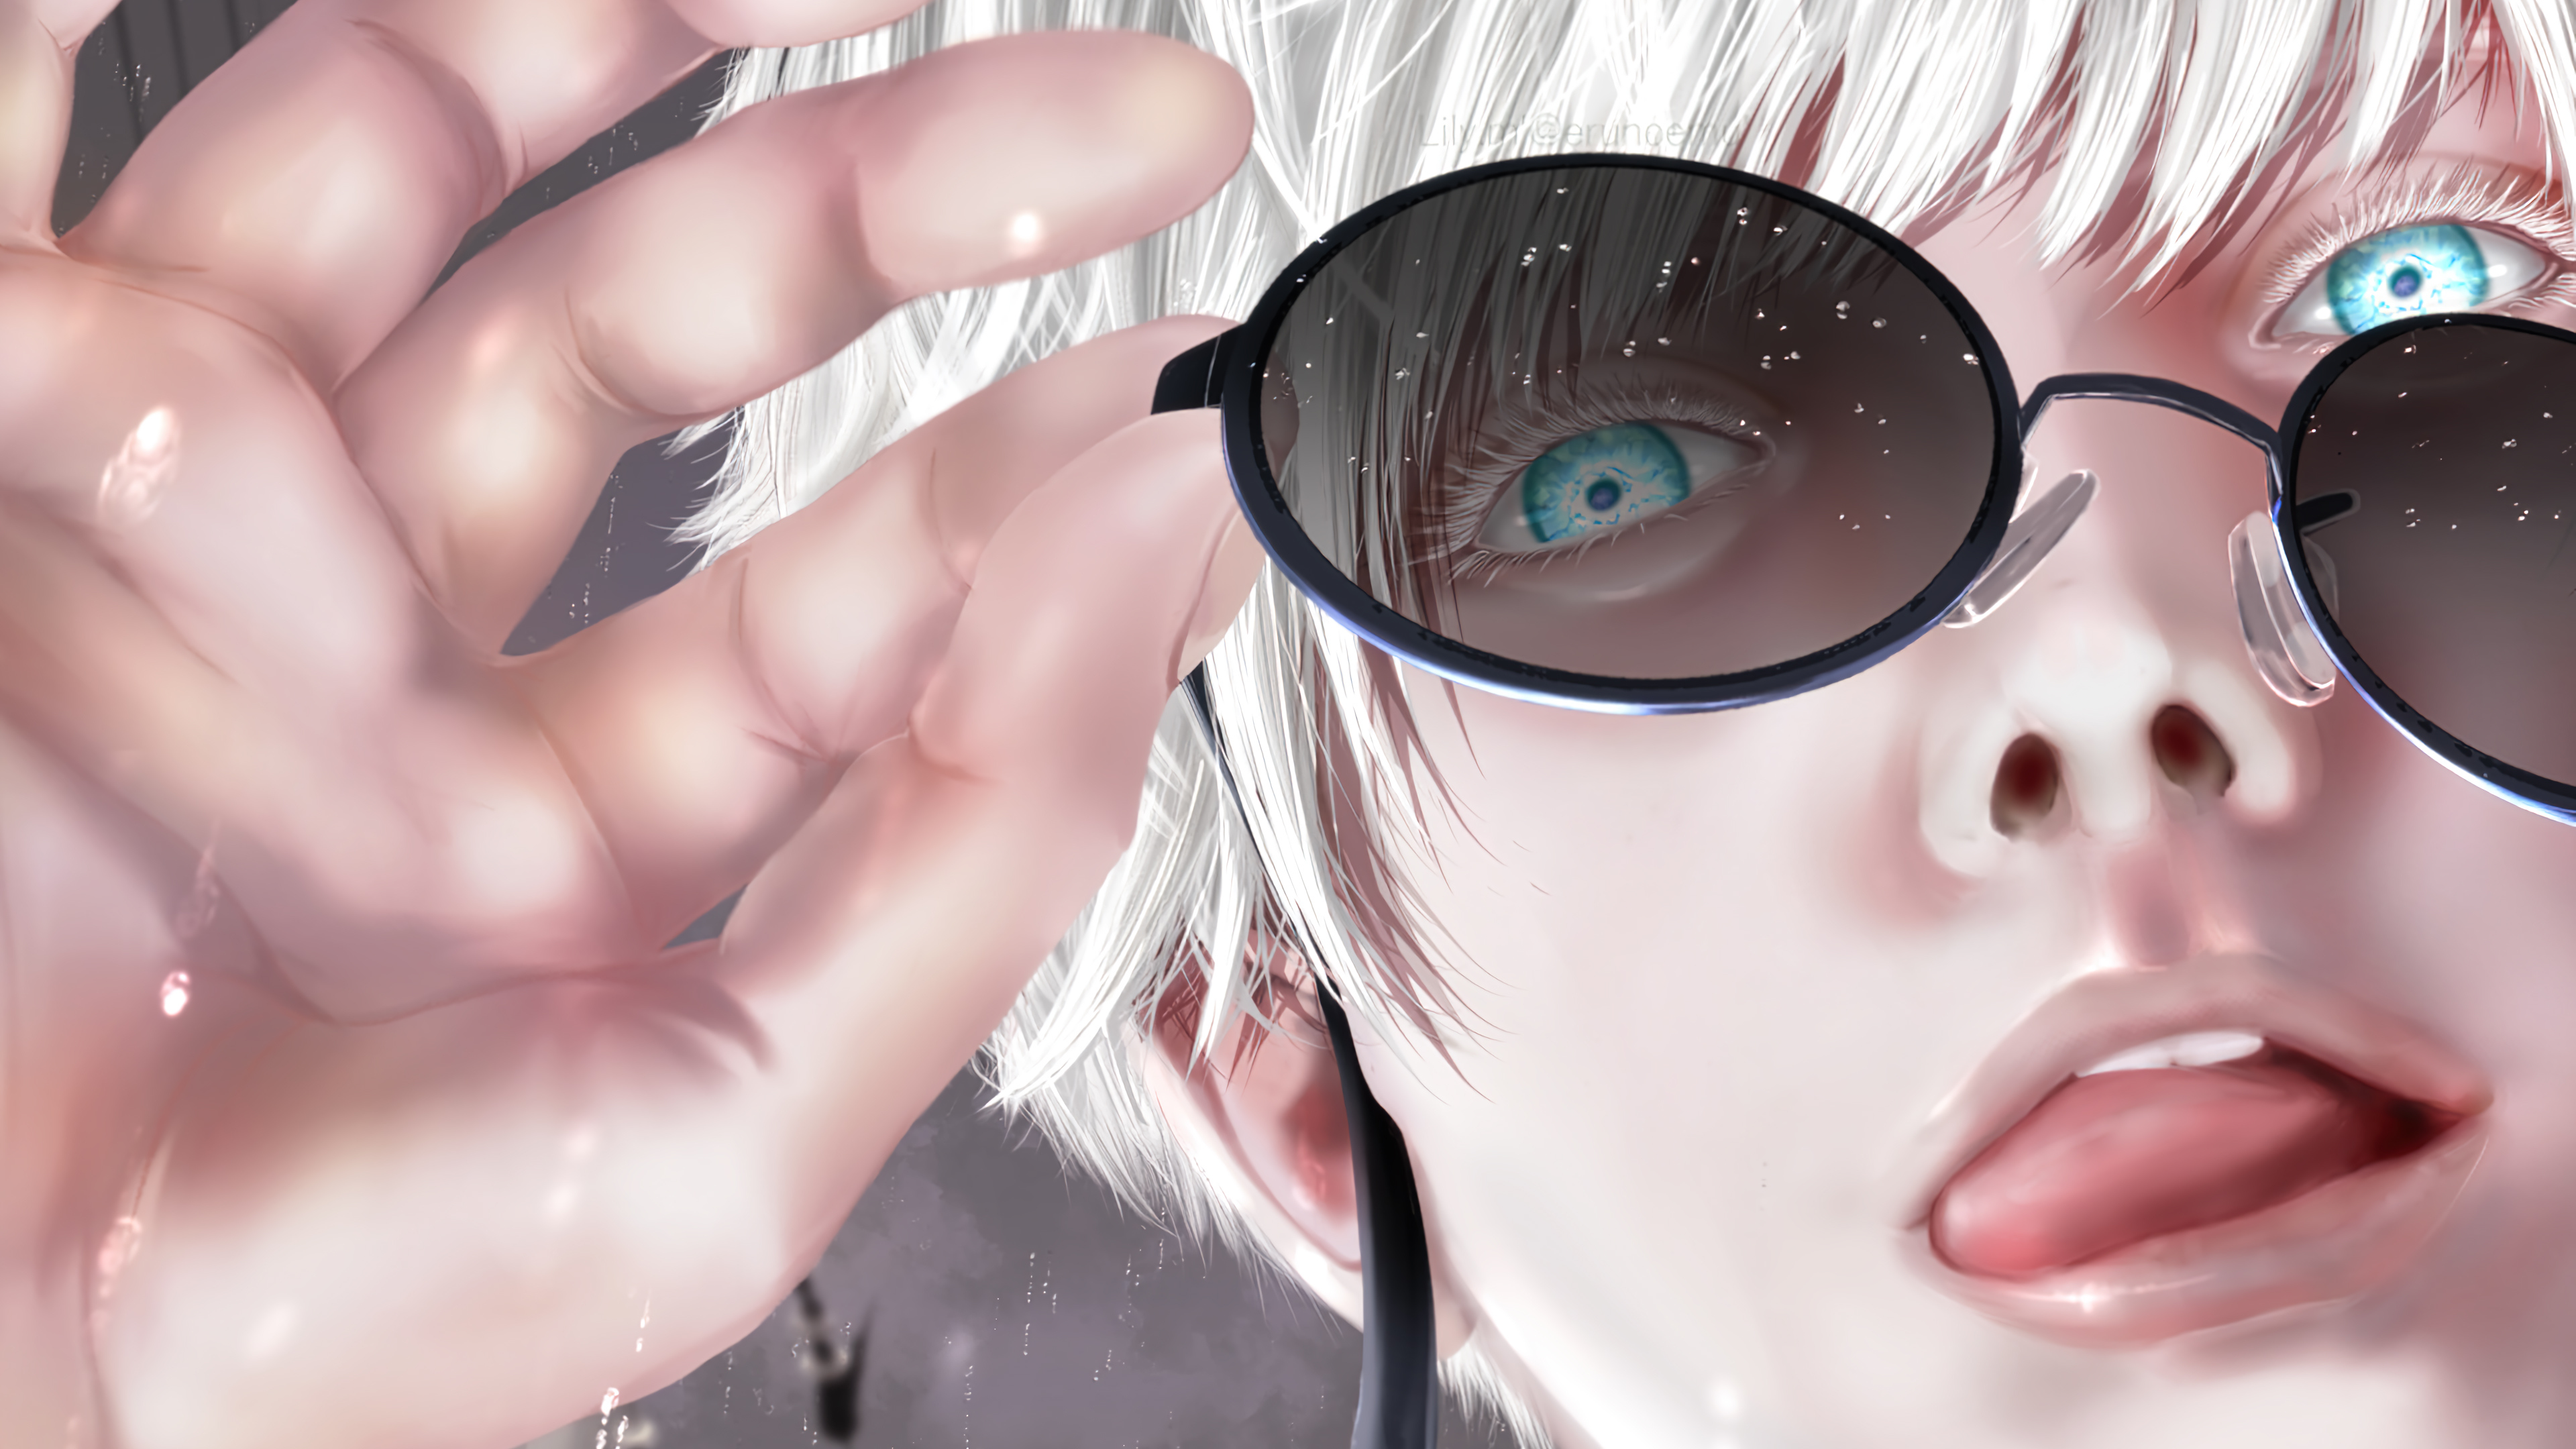 491 Anime Boy Glasses Images, Stock Photos & Vectors | Shutterstock